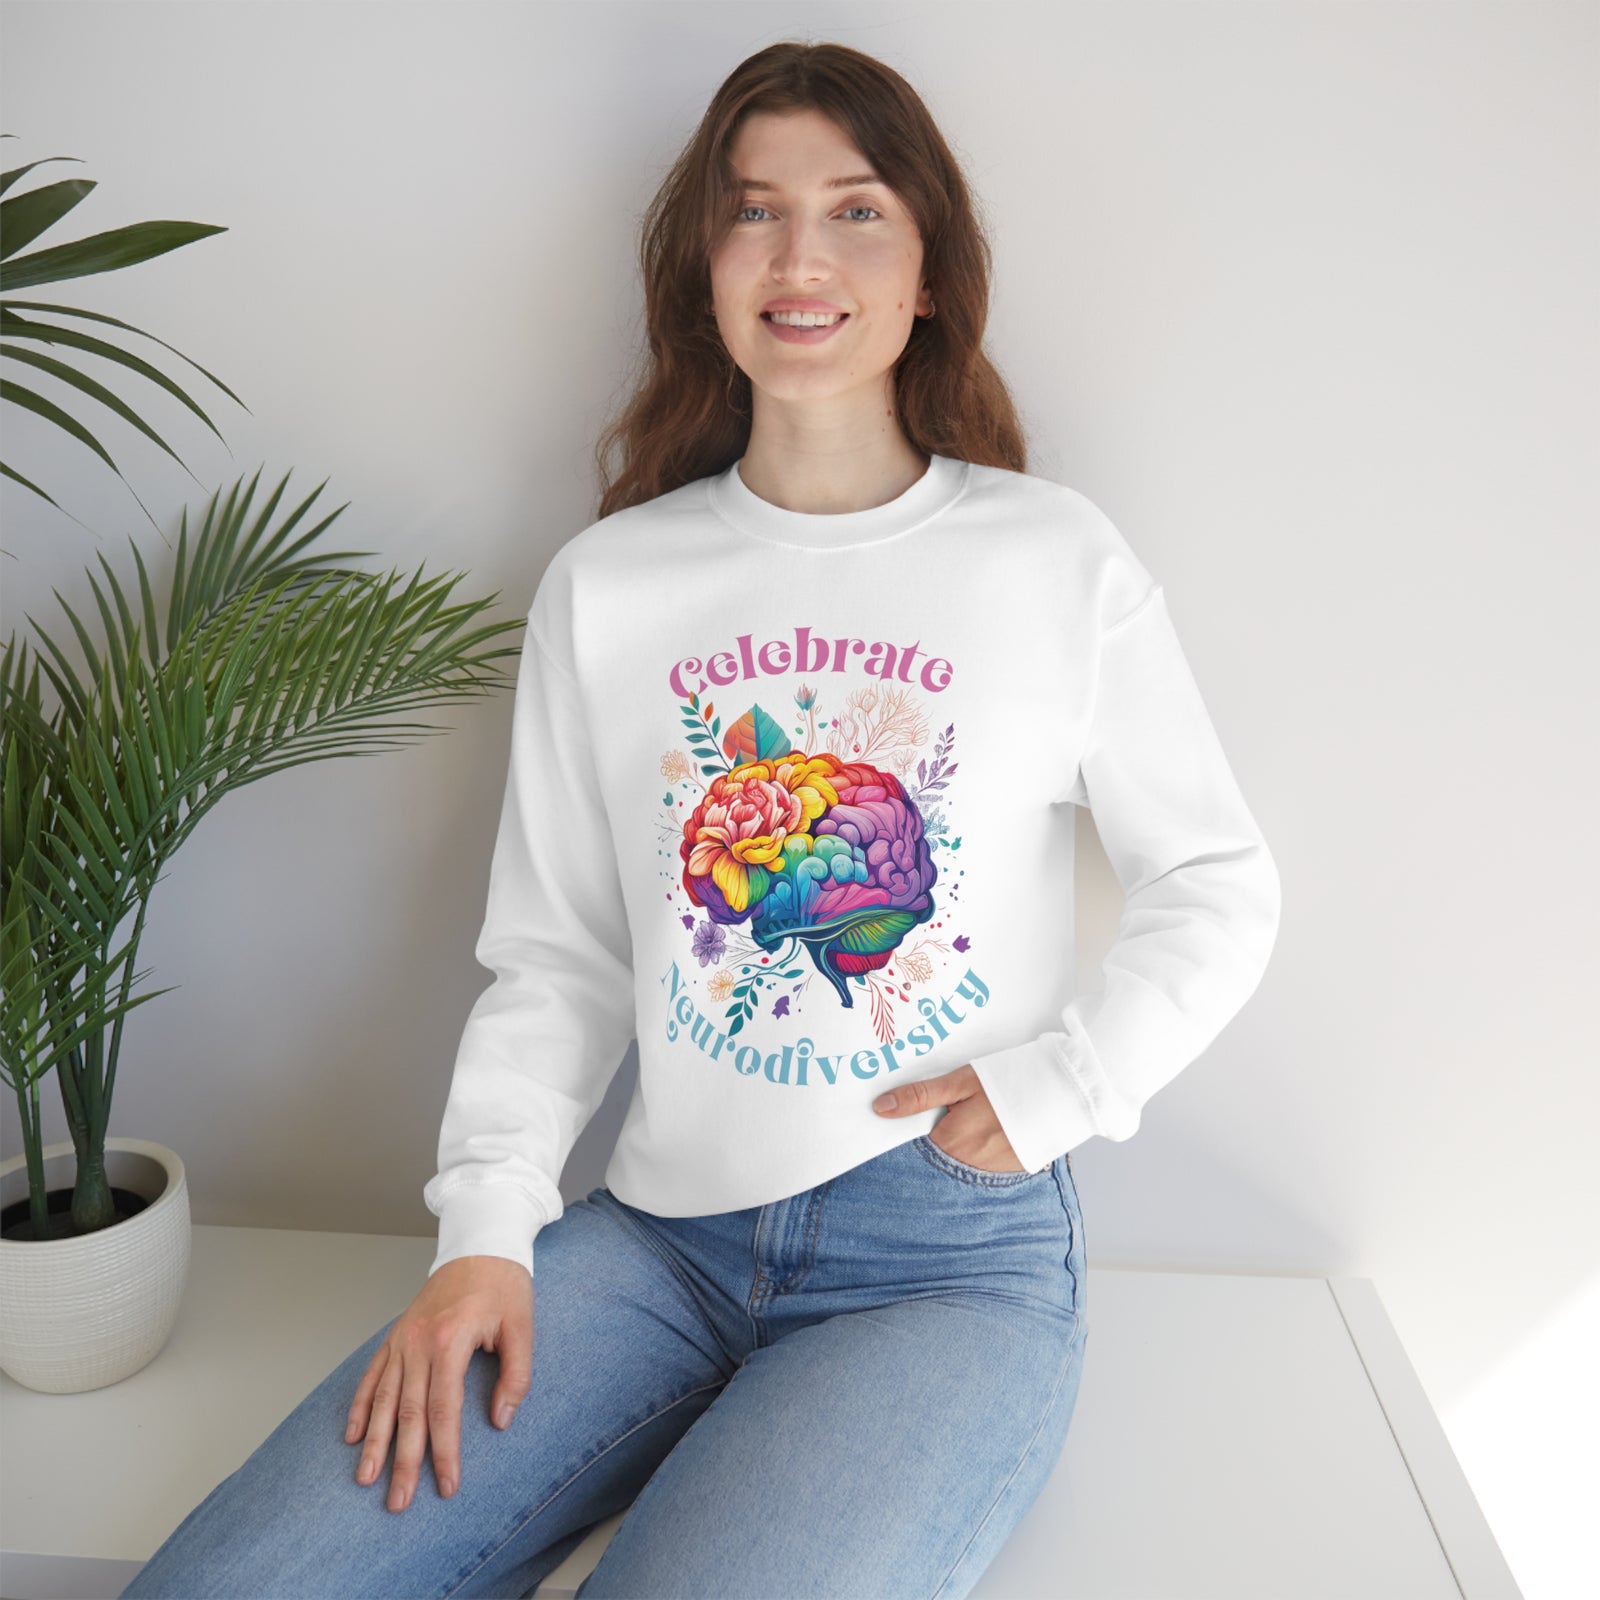 Celebrate Neurodiversity Shirt | Autism Shirt | Autism Awareness Shirt | Inclusion Shirt | Brain Art | Unisex Crewneck Sweatshirt